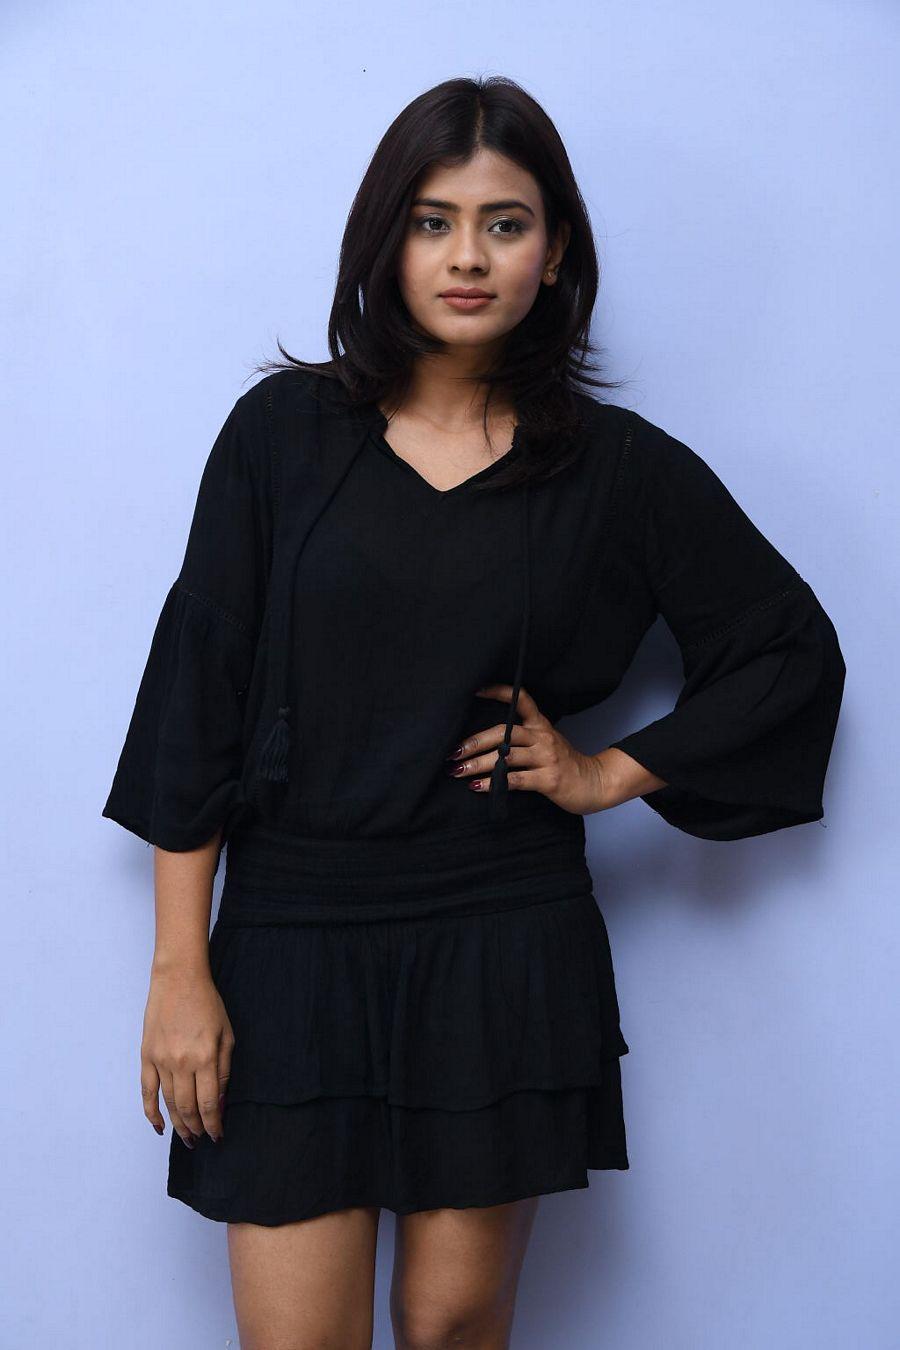 Actress Hebha Patel Latest Photo Gallery